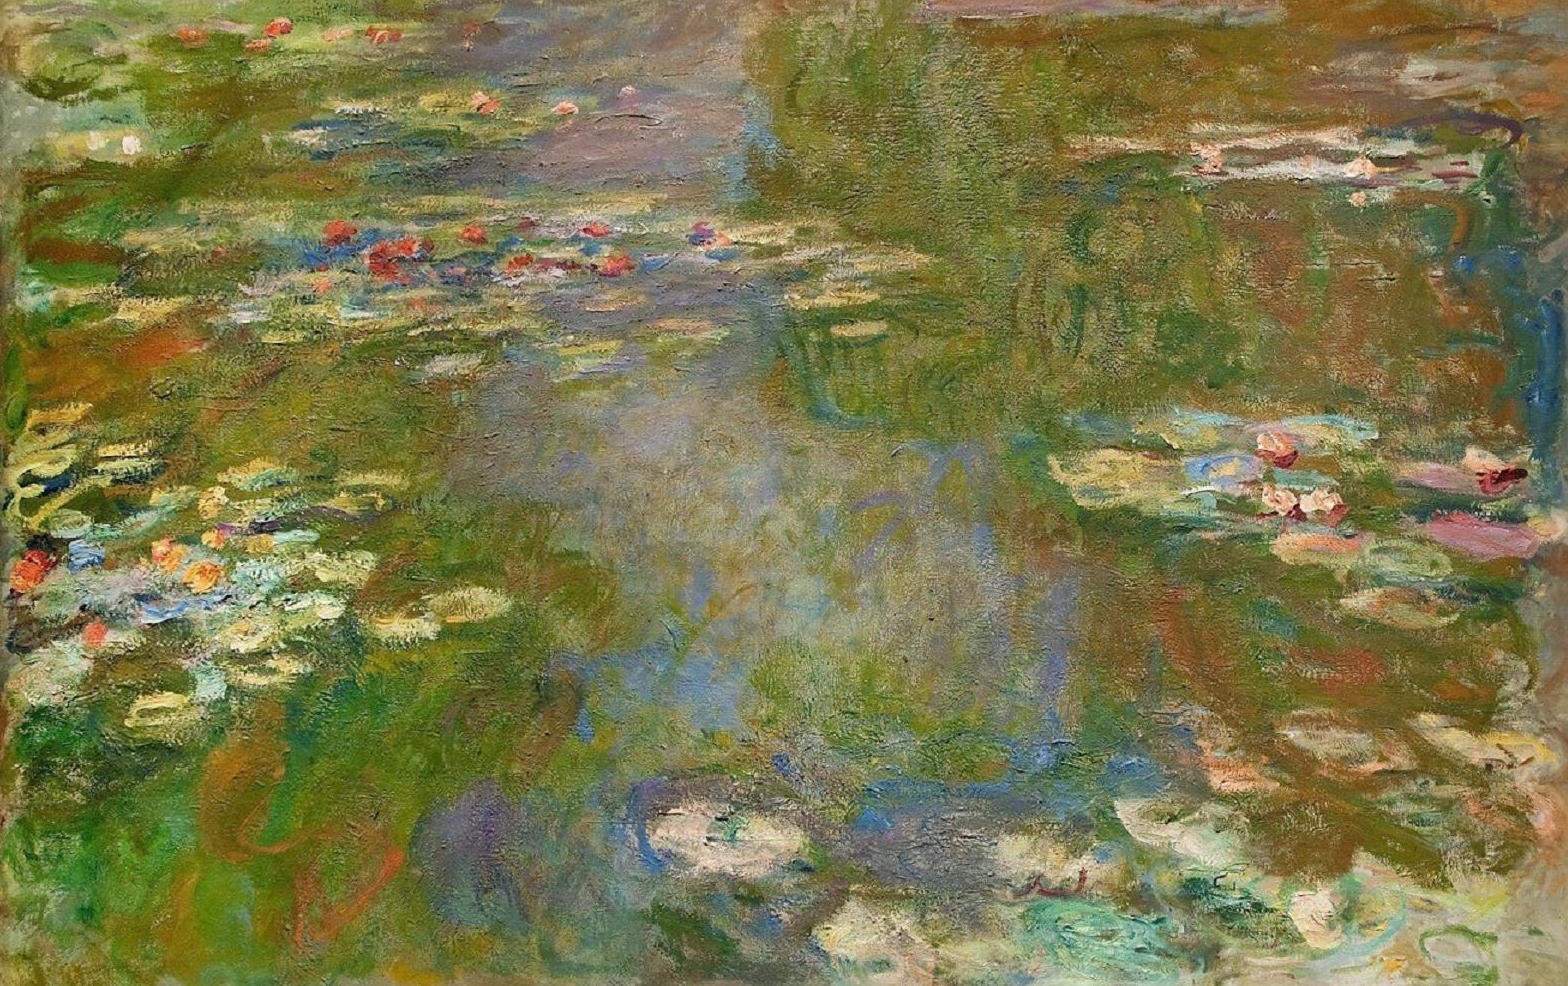 Claude+Monet-1840-1926 (411).jpg